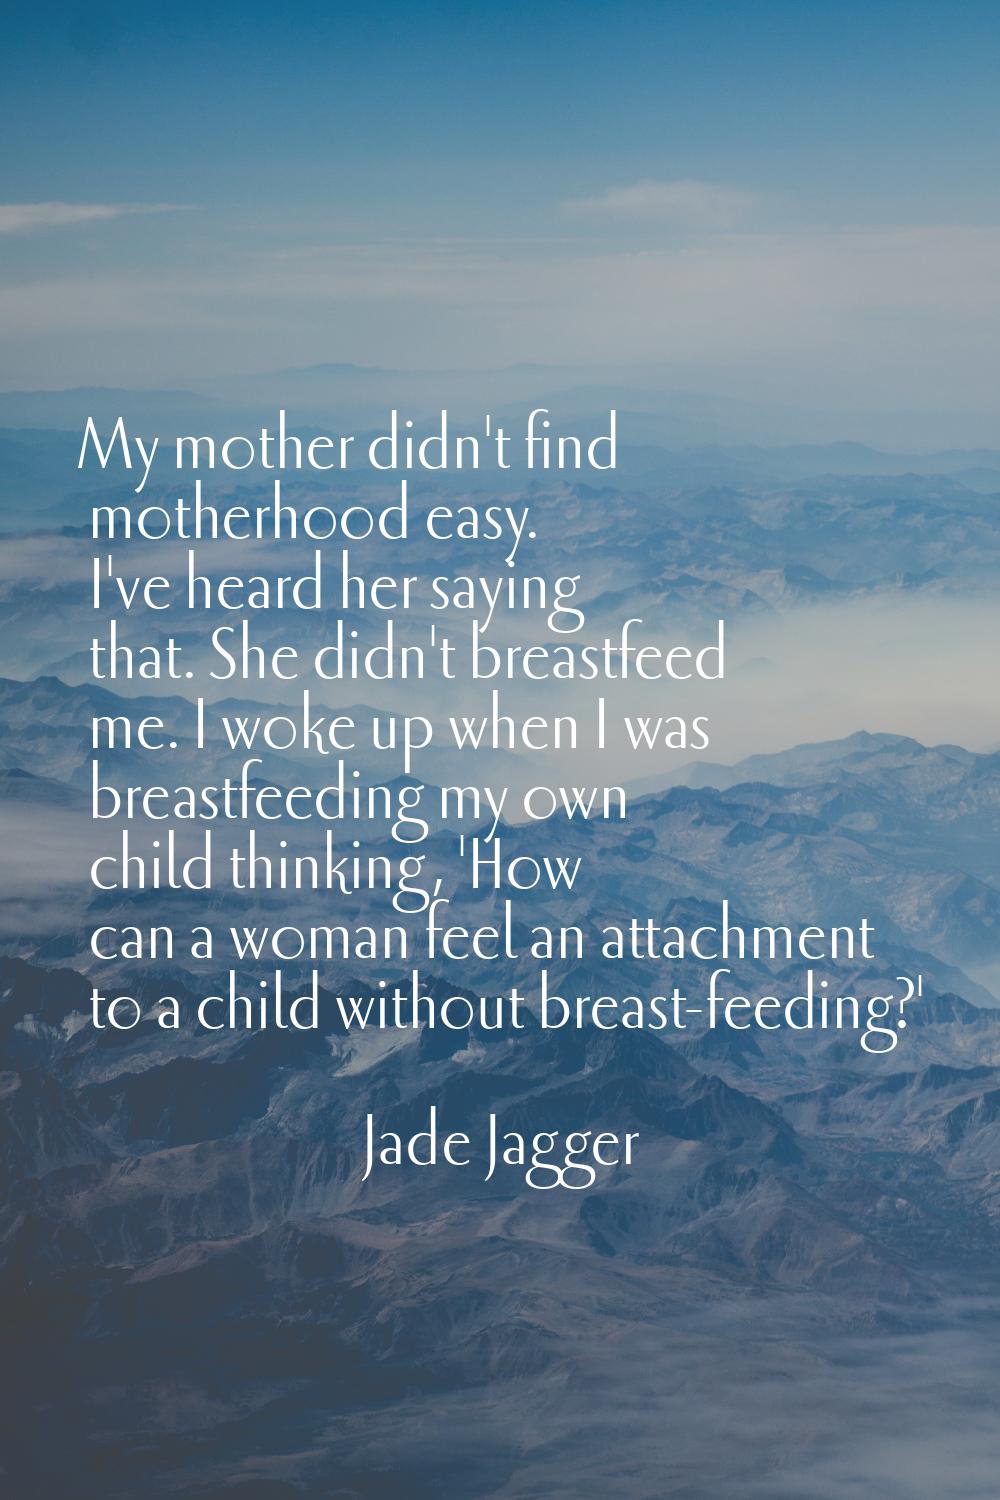 My mother didn't find motherhood easy. I've heard her saying that. She didn't breastfeed me. I woke